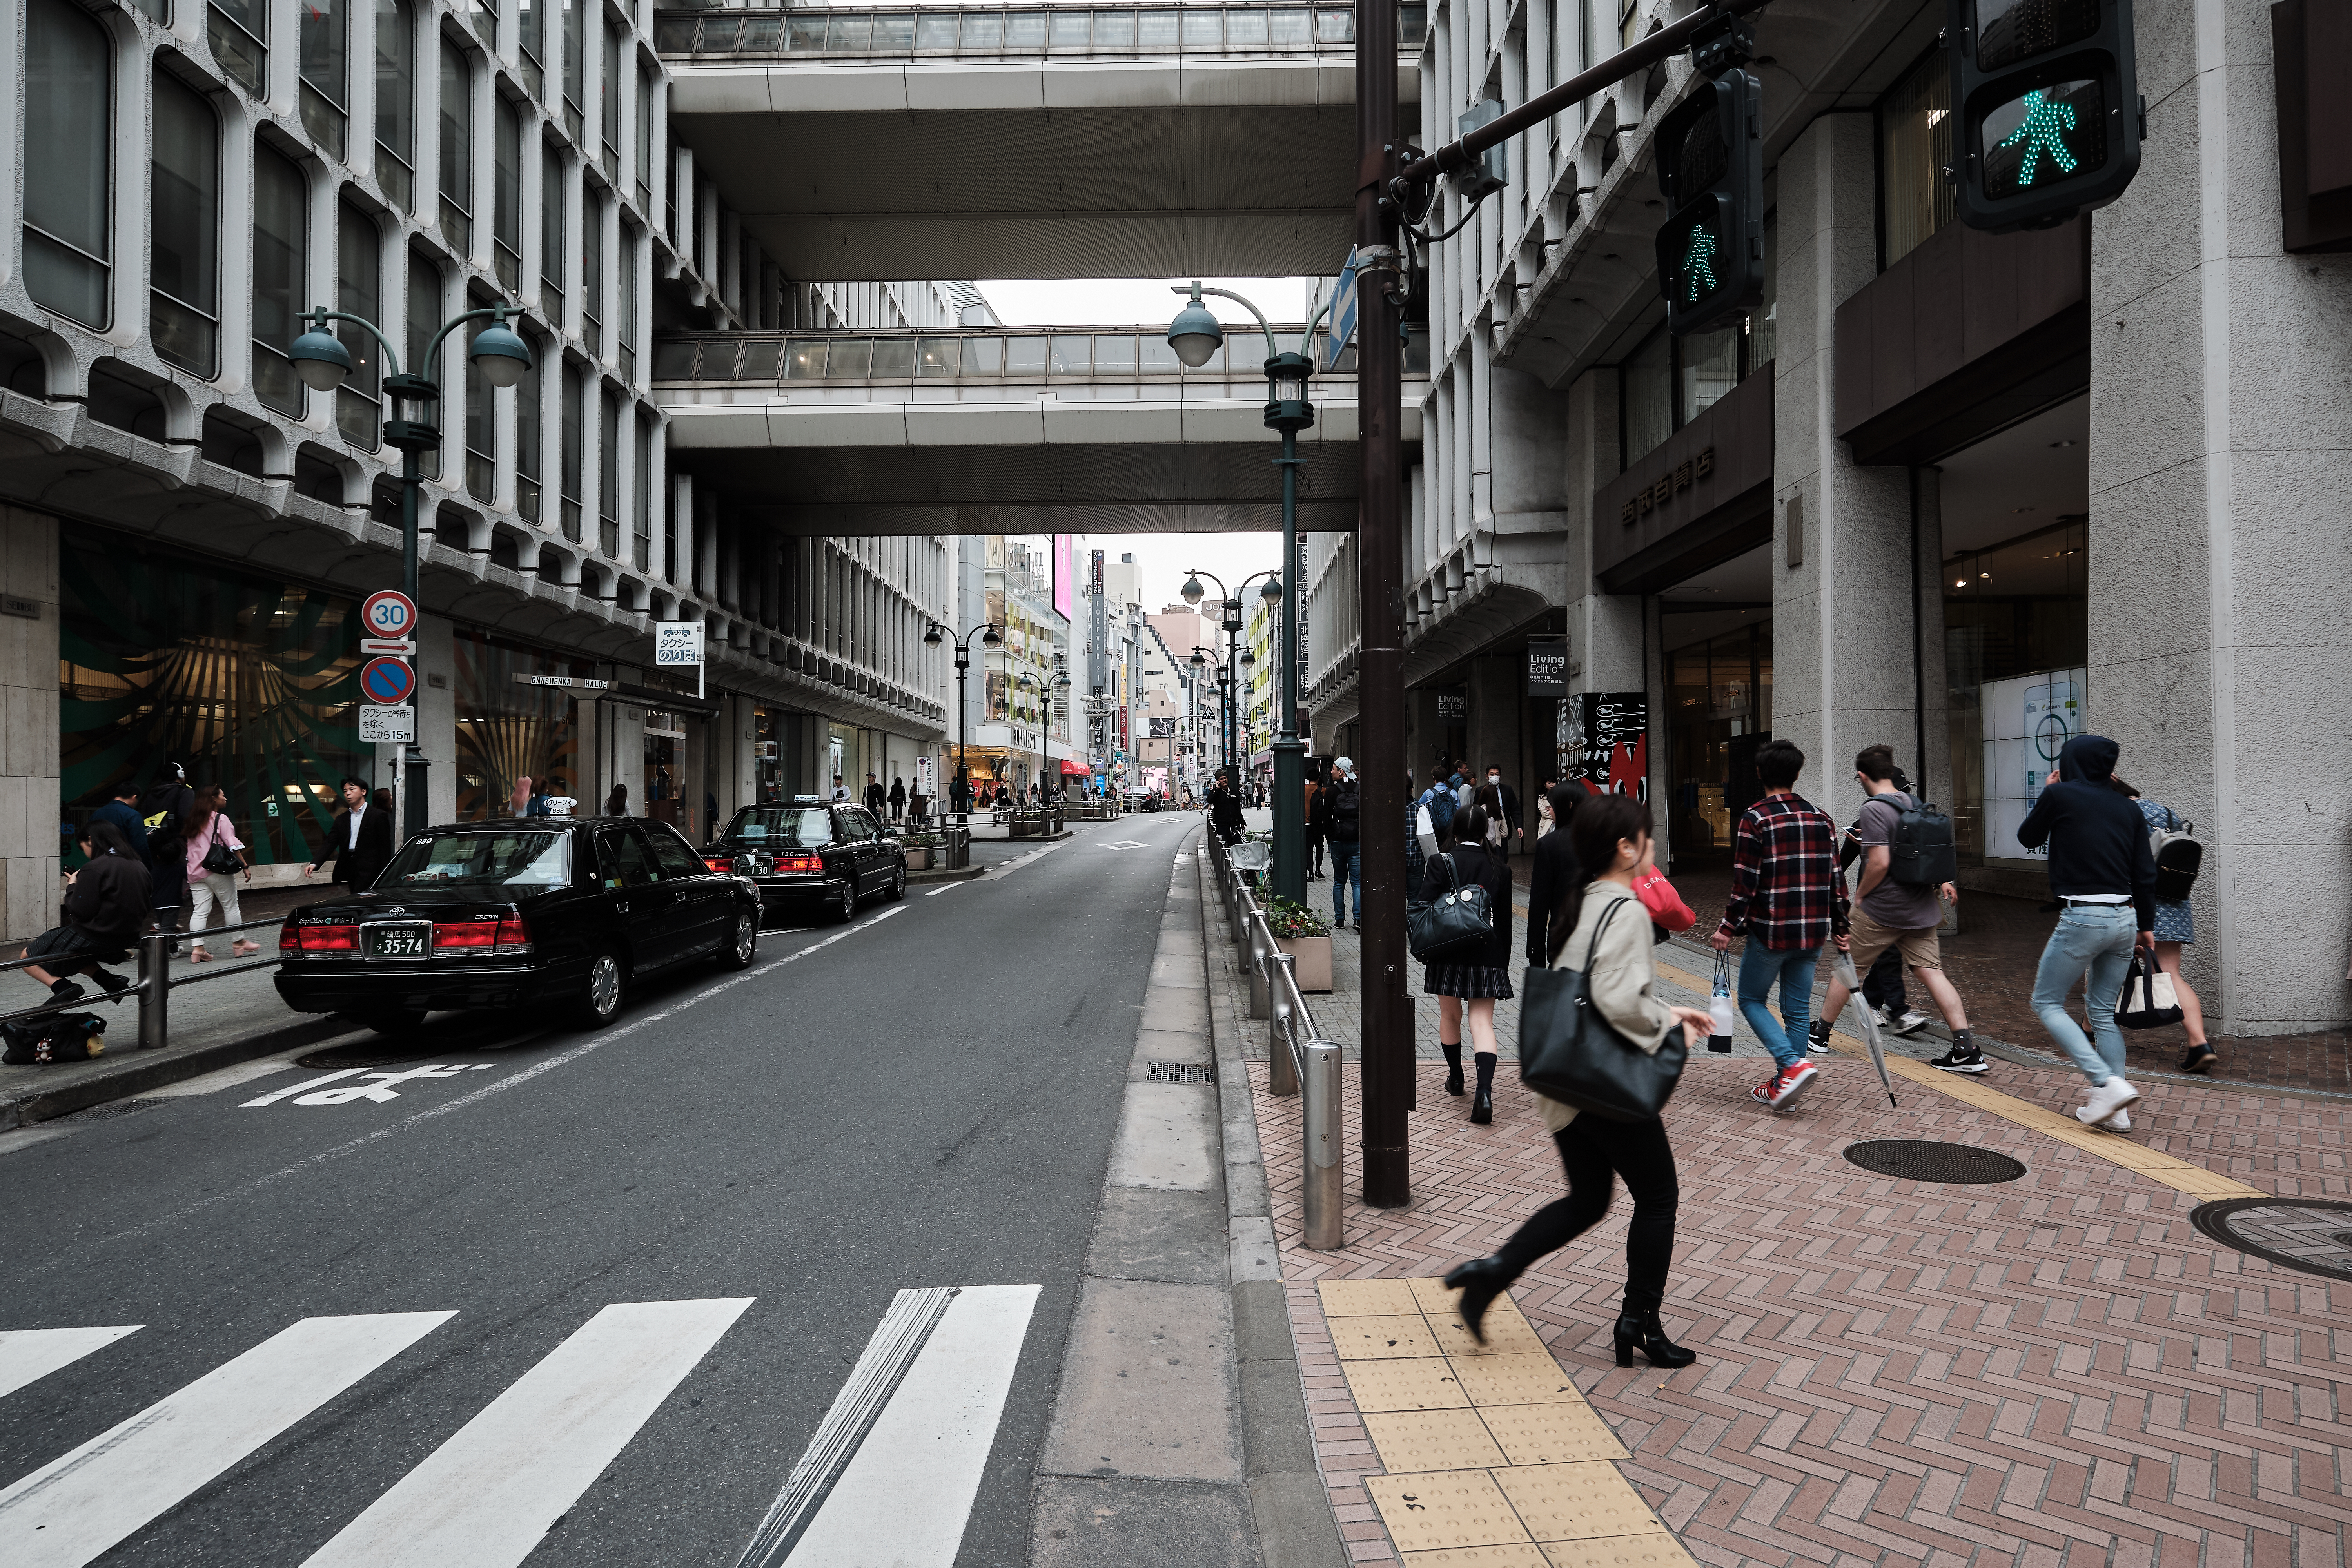 A street scene in Shibuya